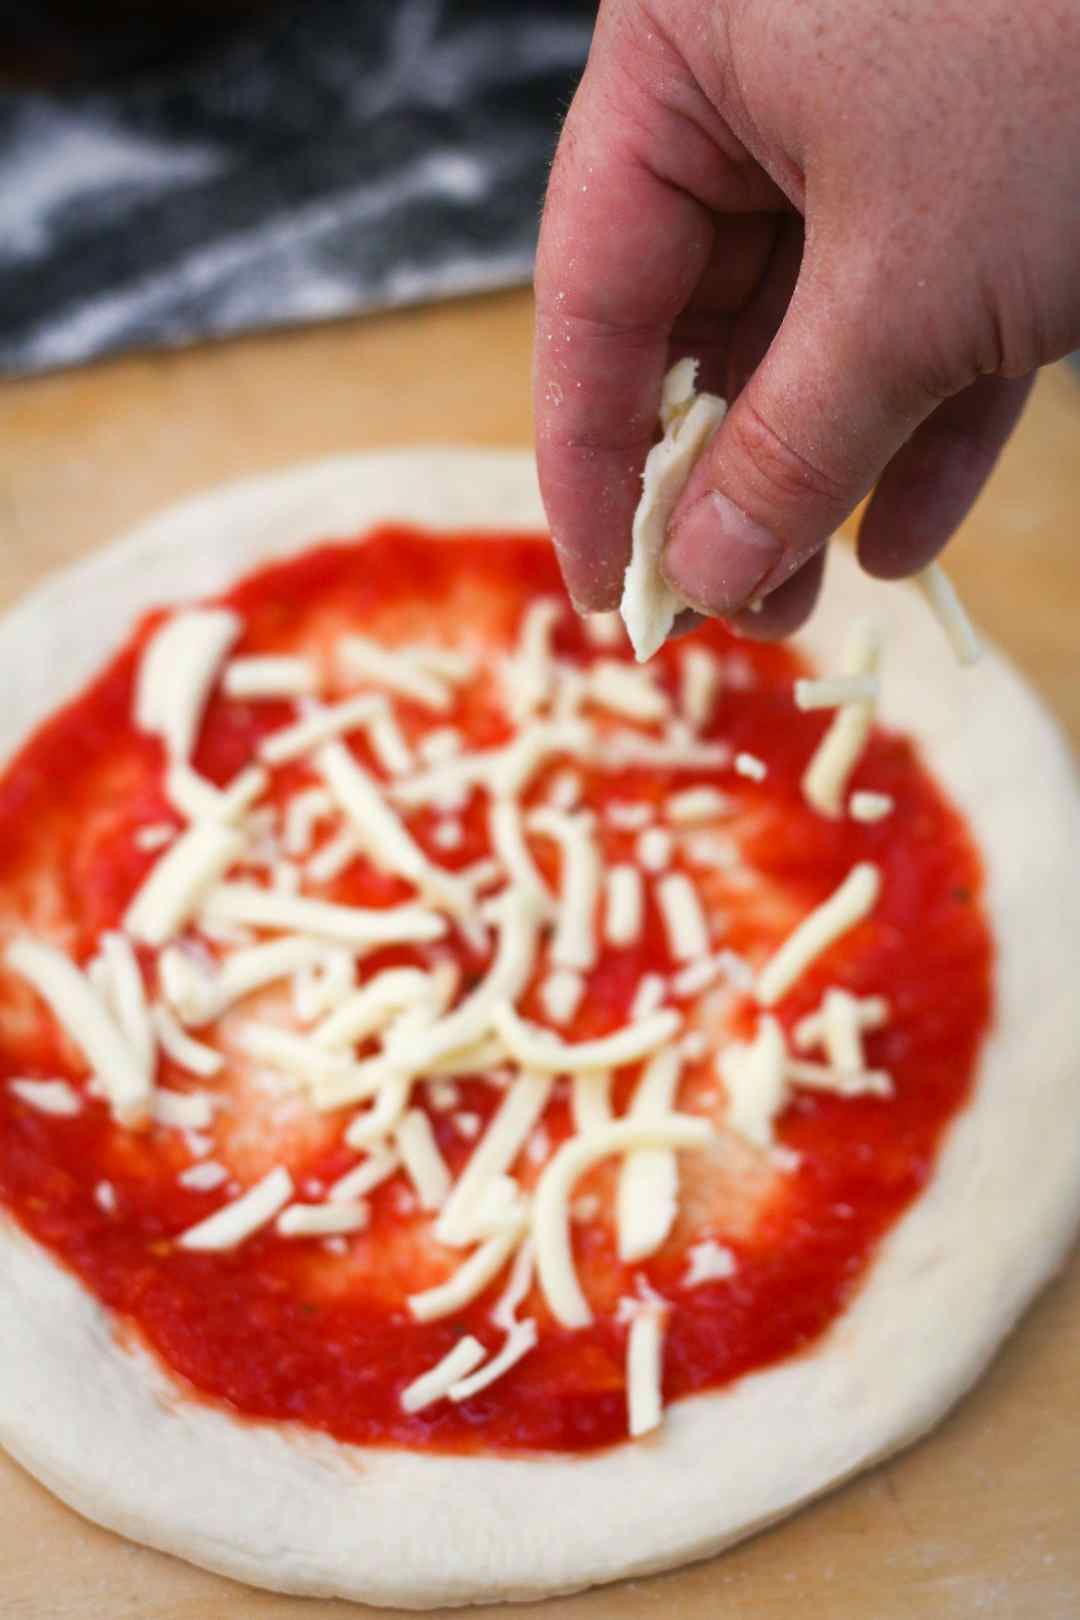 Hero image for supplier Woodstock Pizza